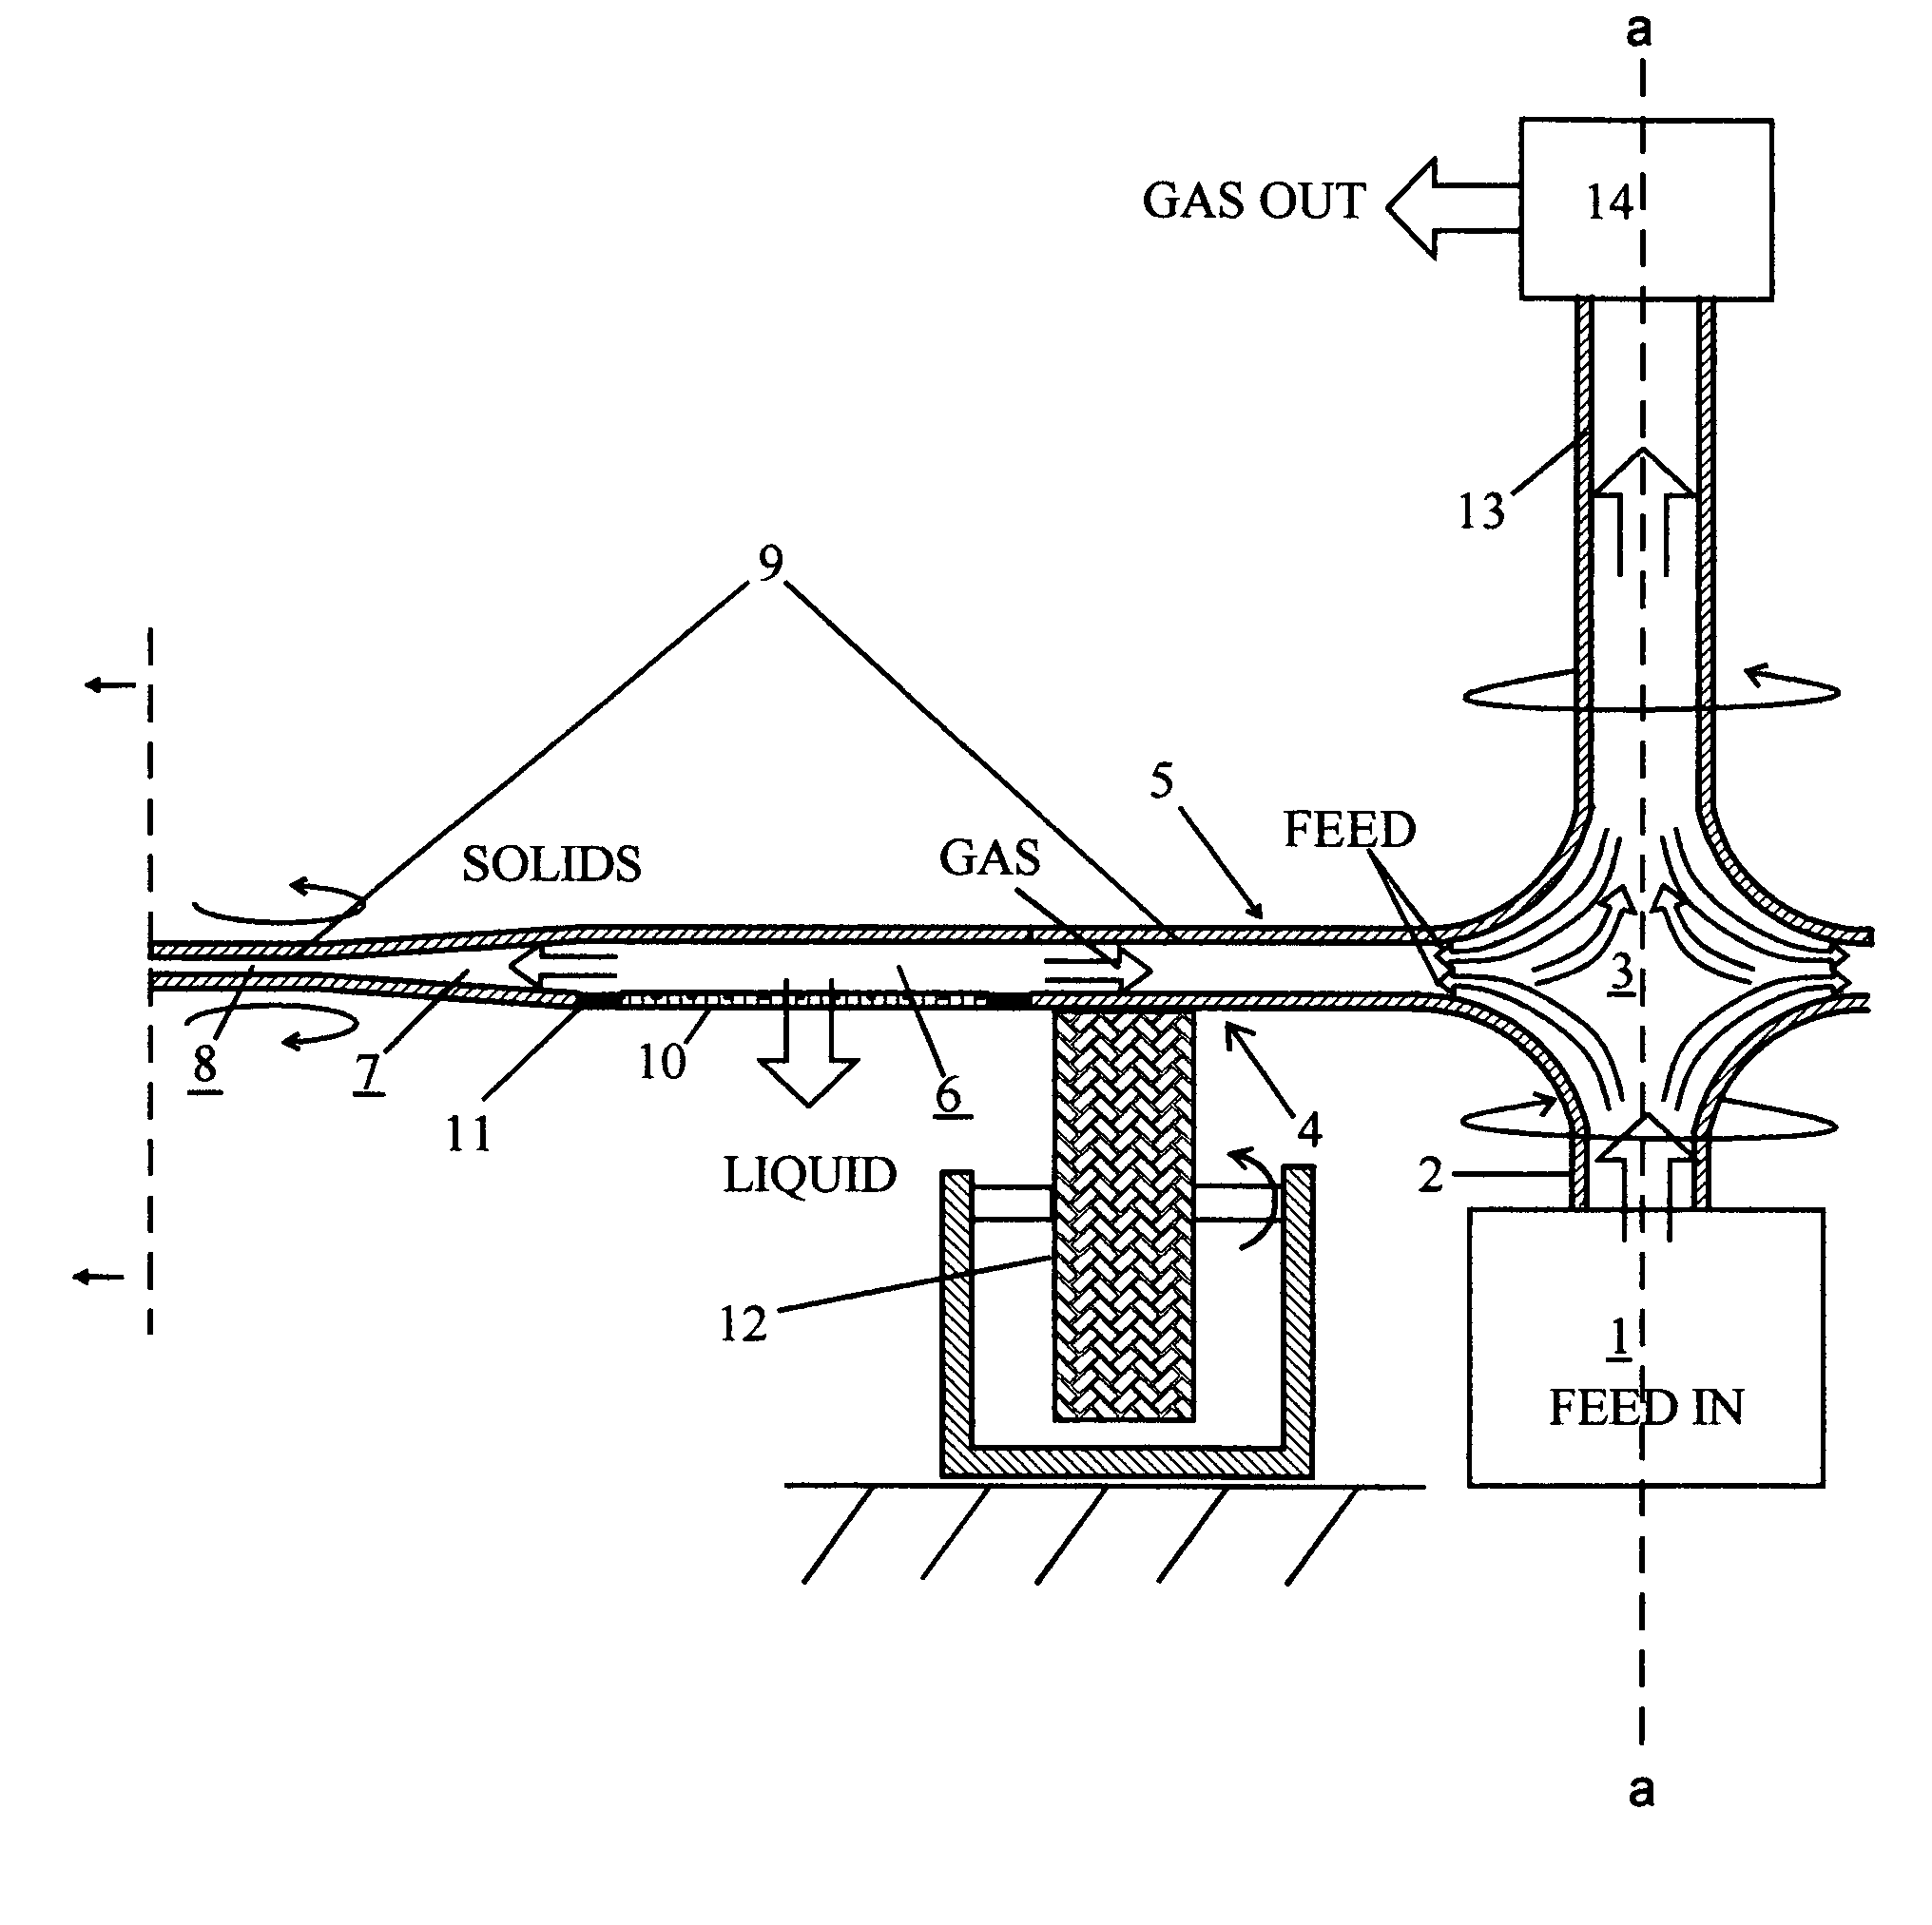 Rotary annular crossflow filter, degasser, and sludge thickener